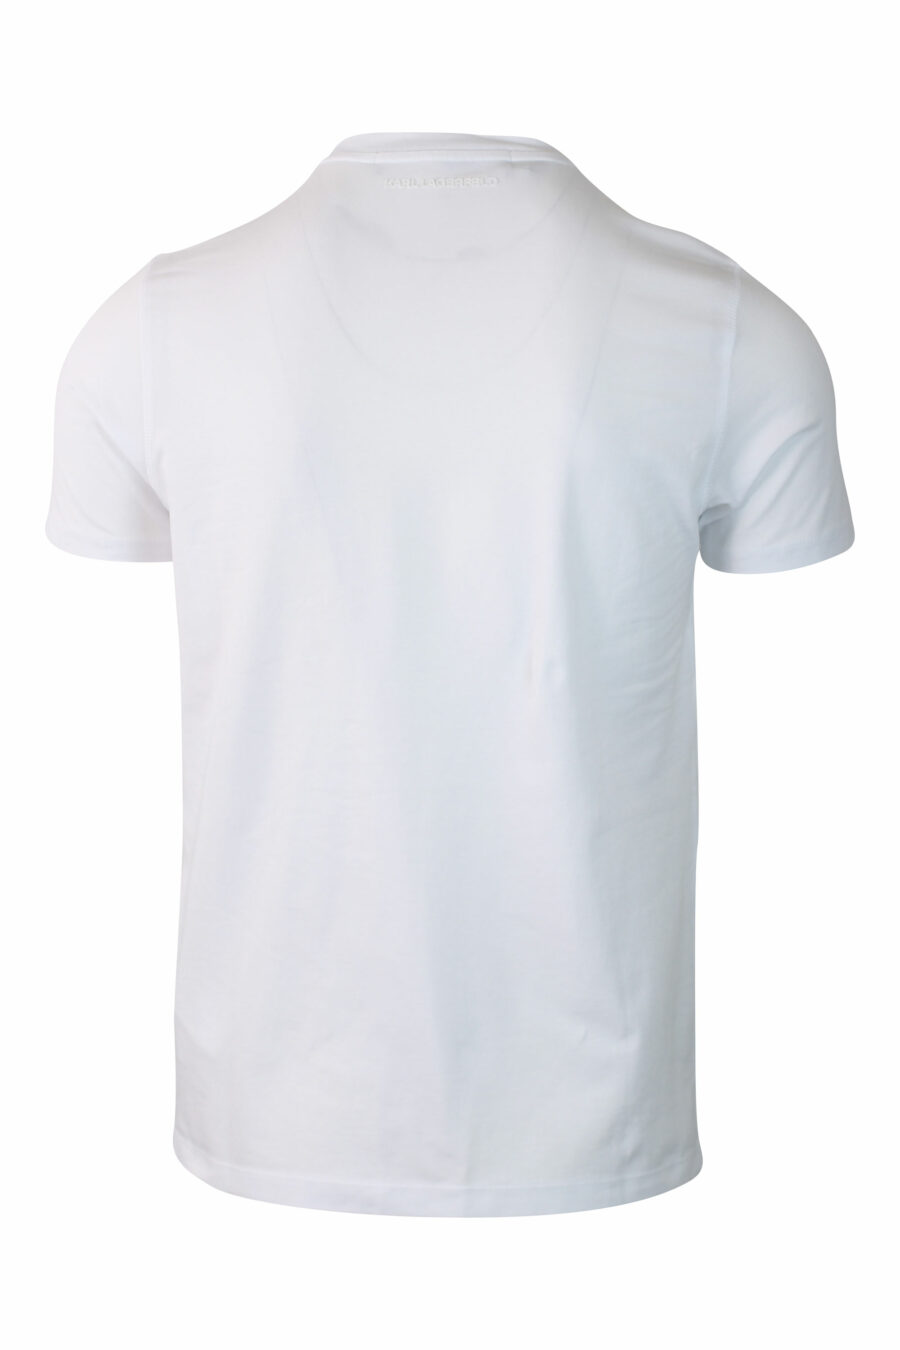 T-shirt branca com silhueta maxilogo "karl" - IMG 0122